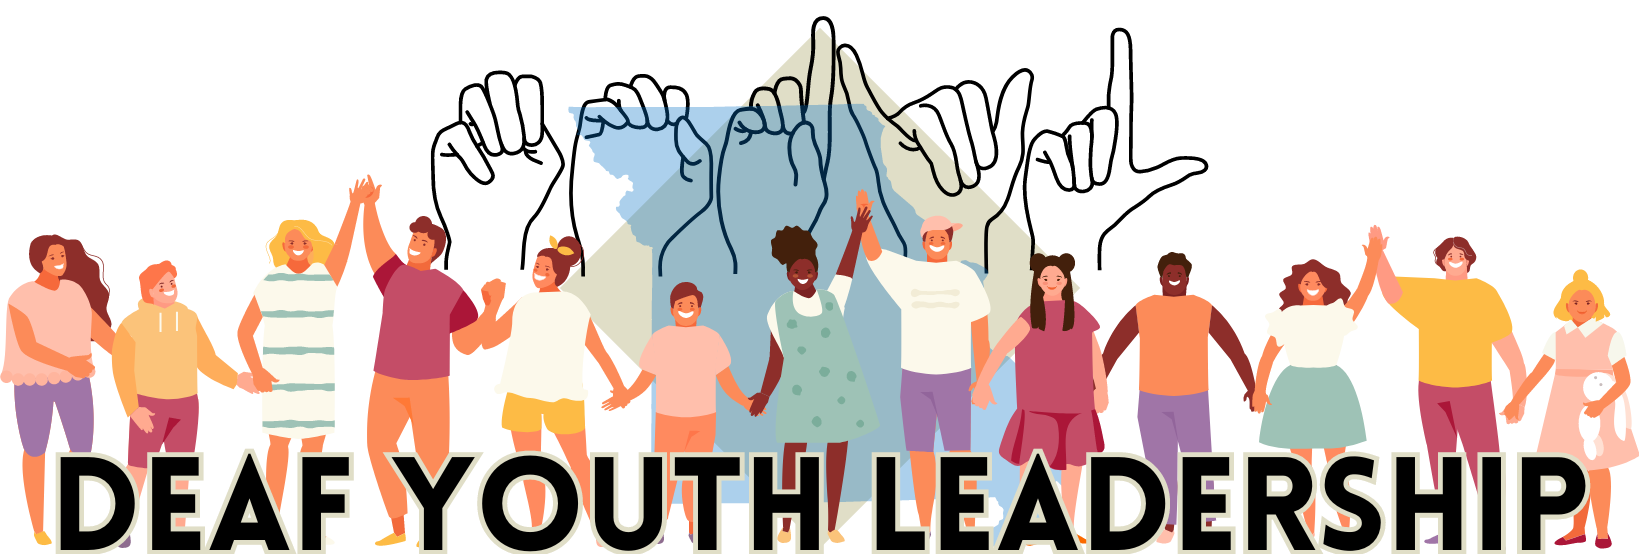 Missouri Youth Deaf Leader logo